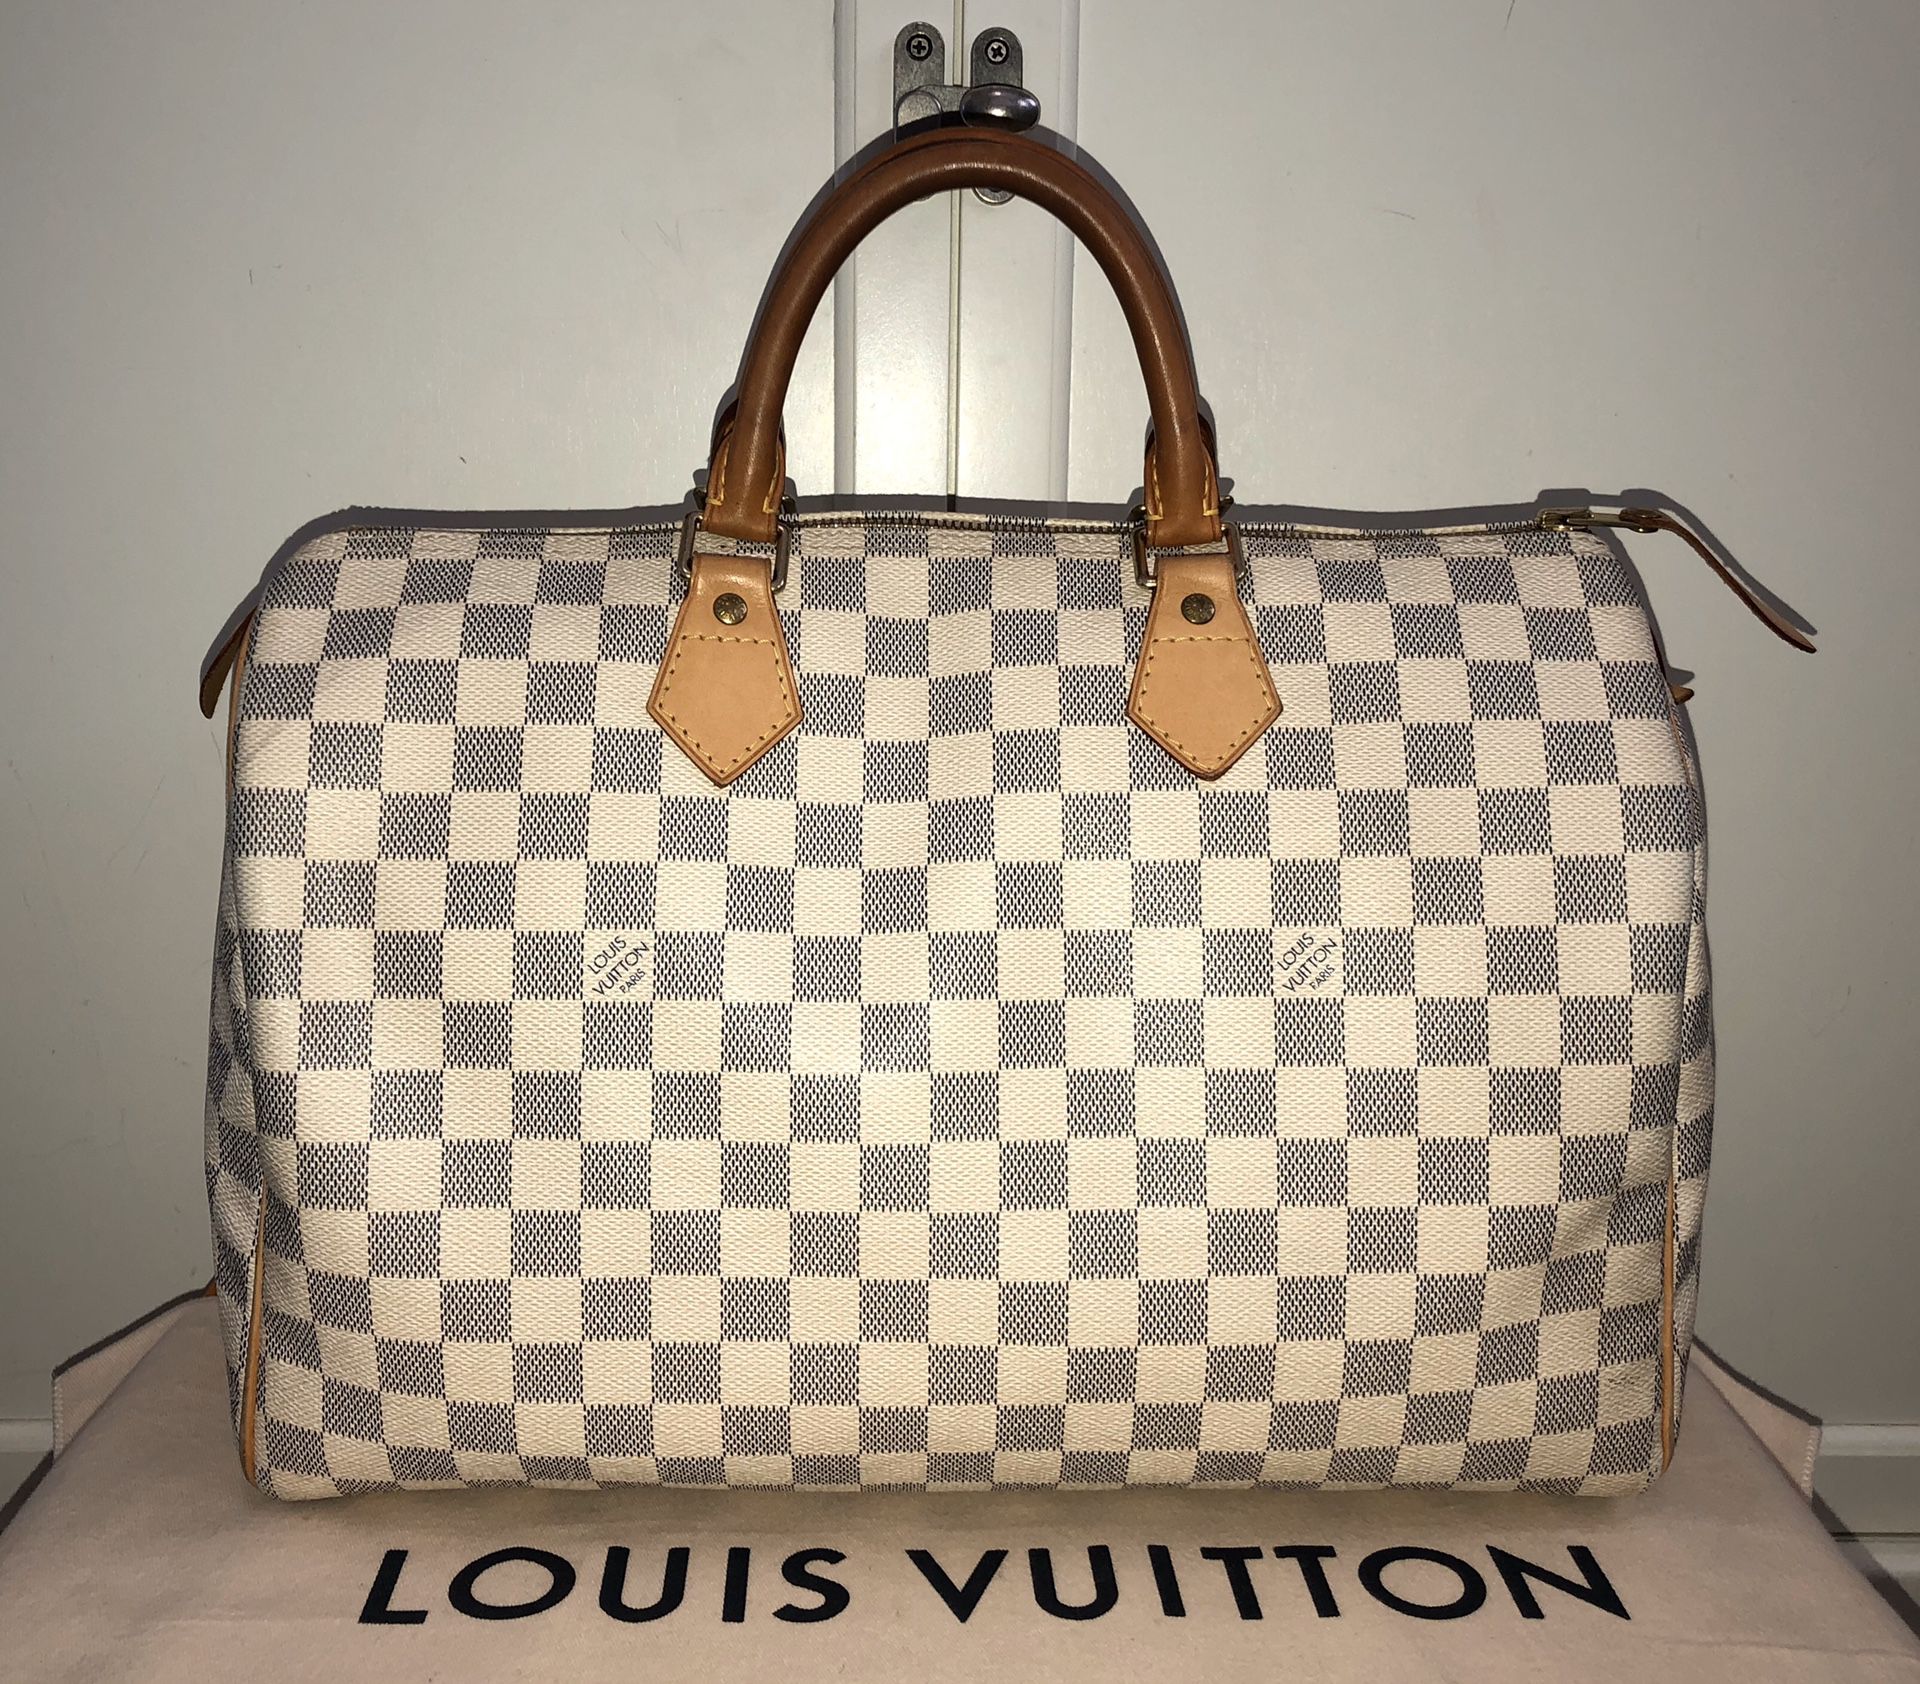 Louis Vuitton Speedy 35 bag